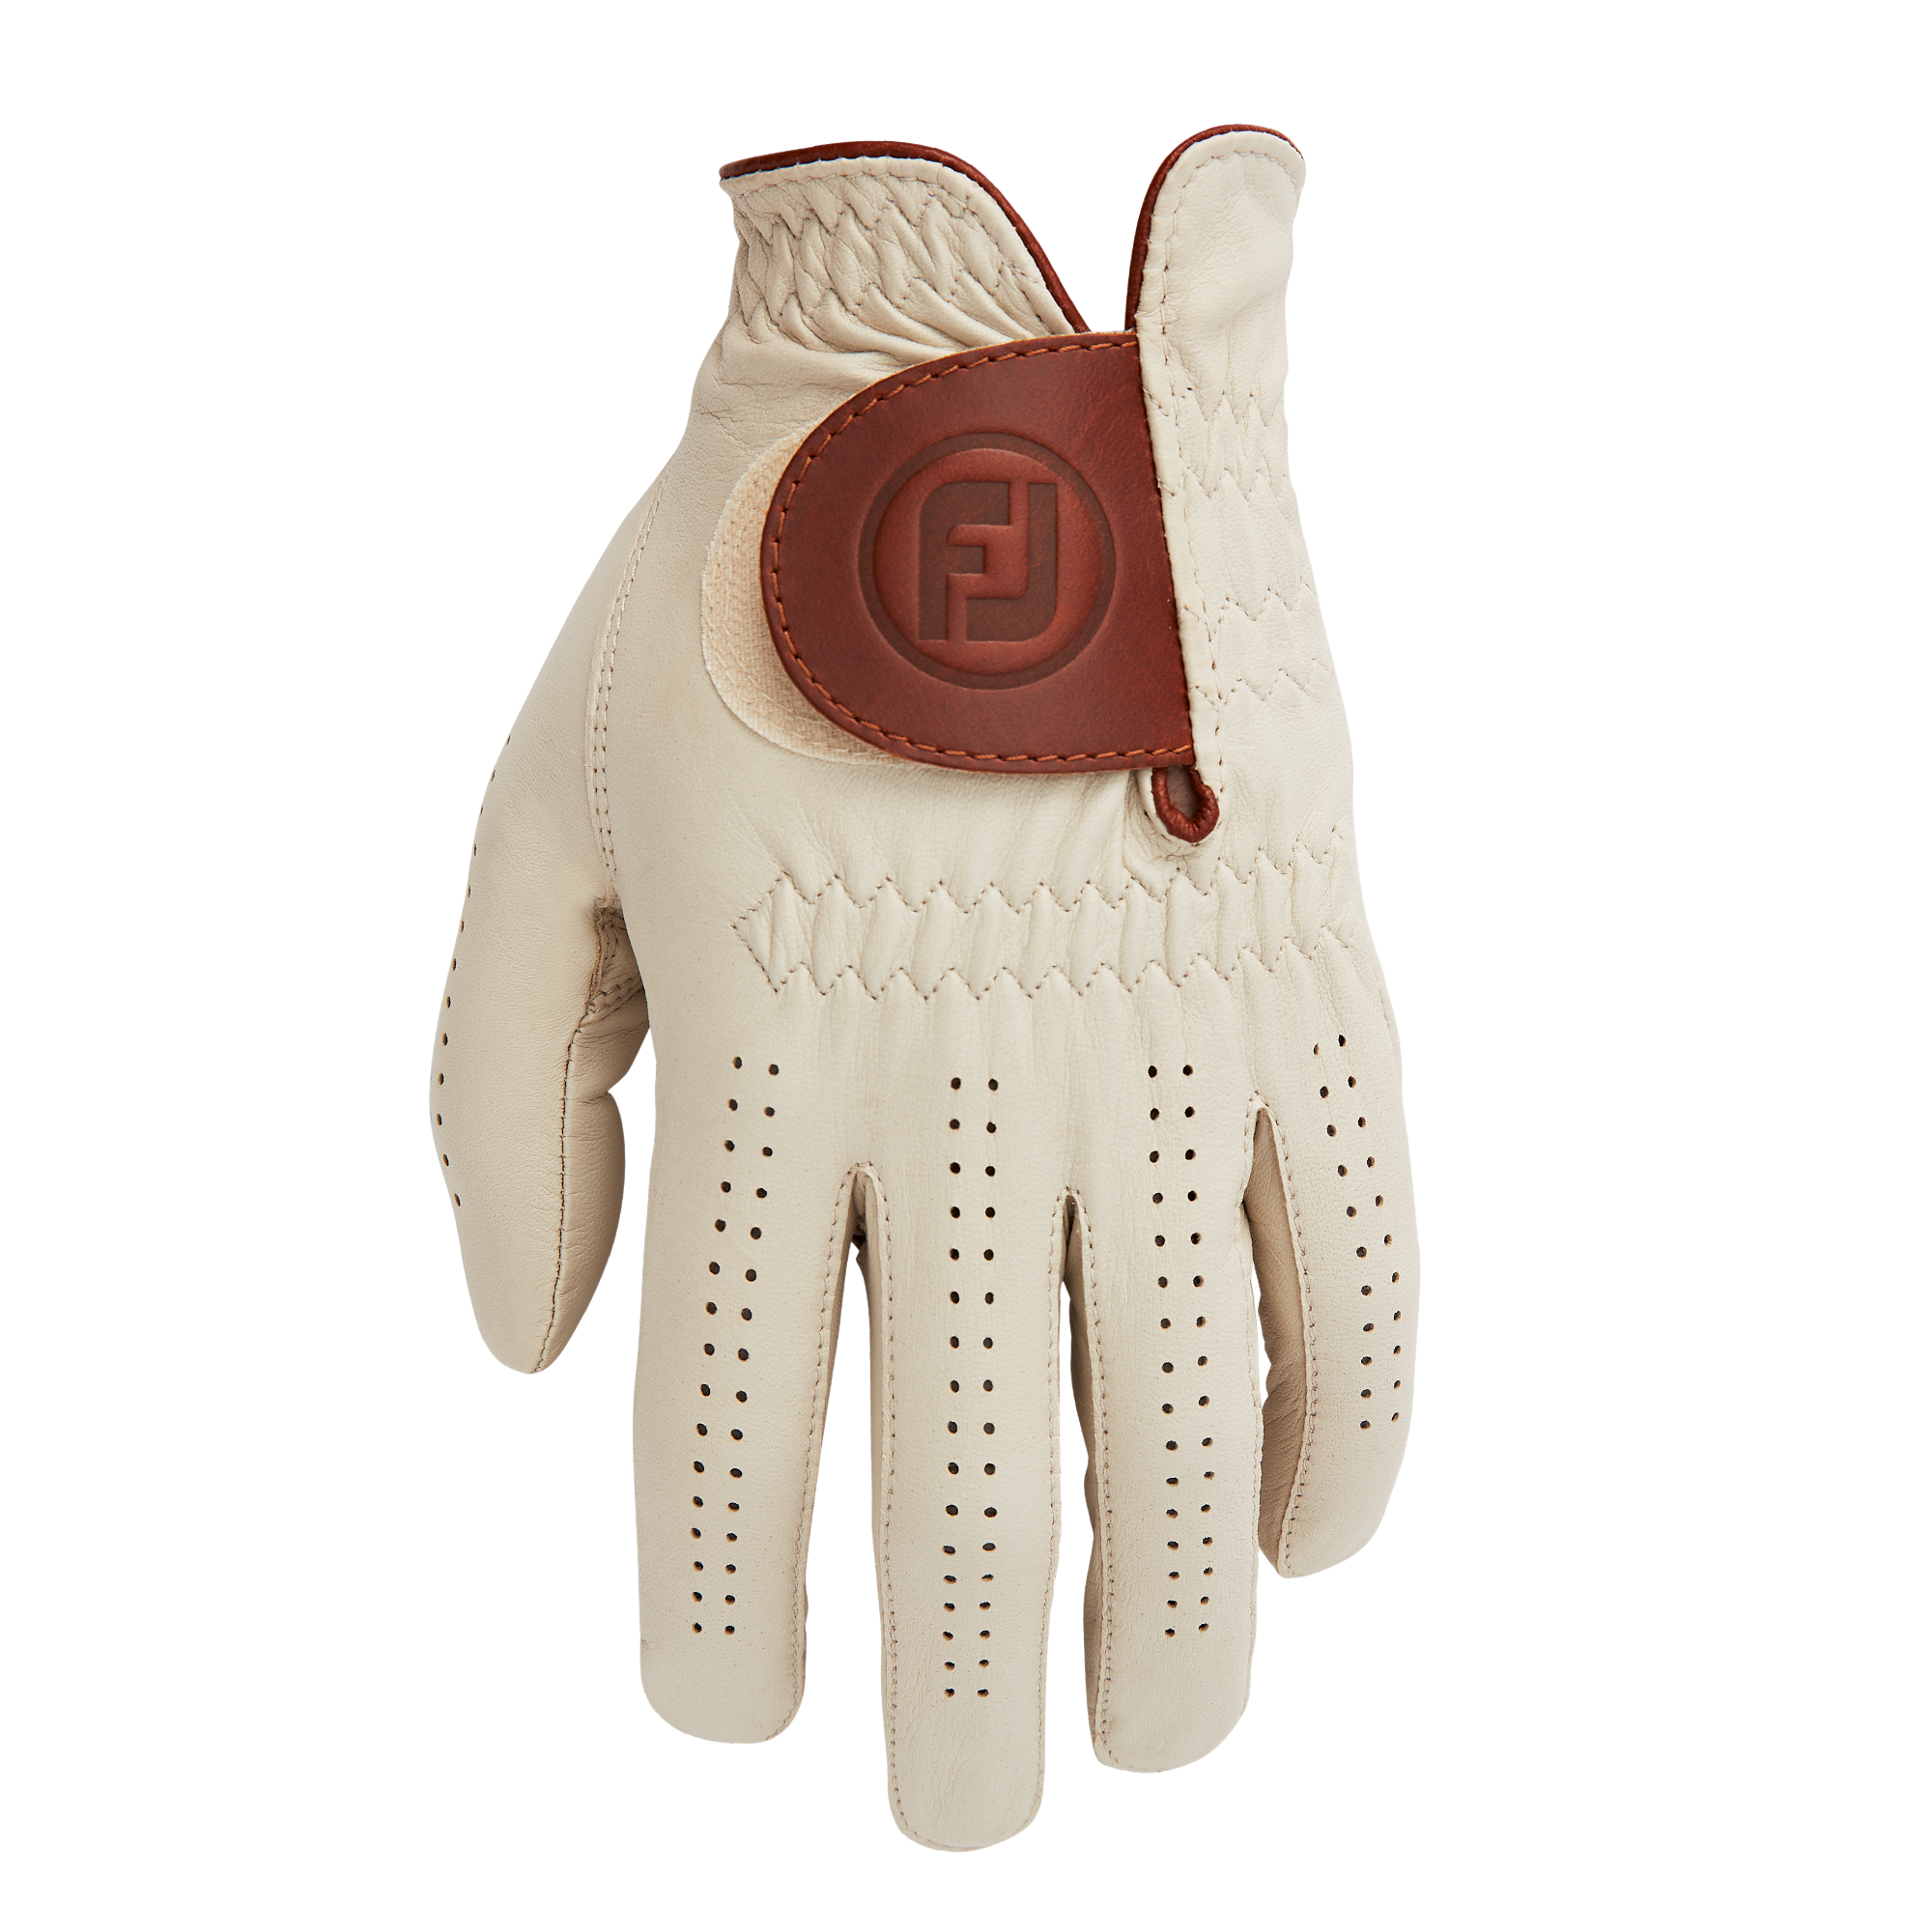 Premium Leather Golf Glove - Men / Bespoke 1857 Collection